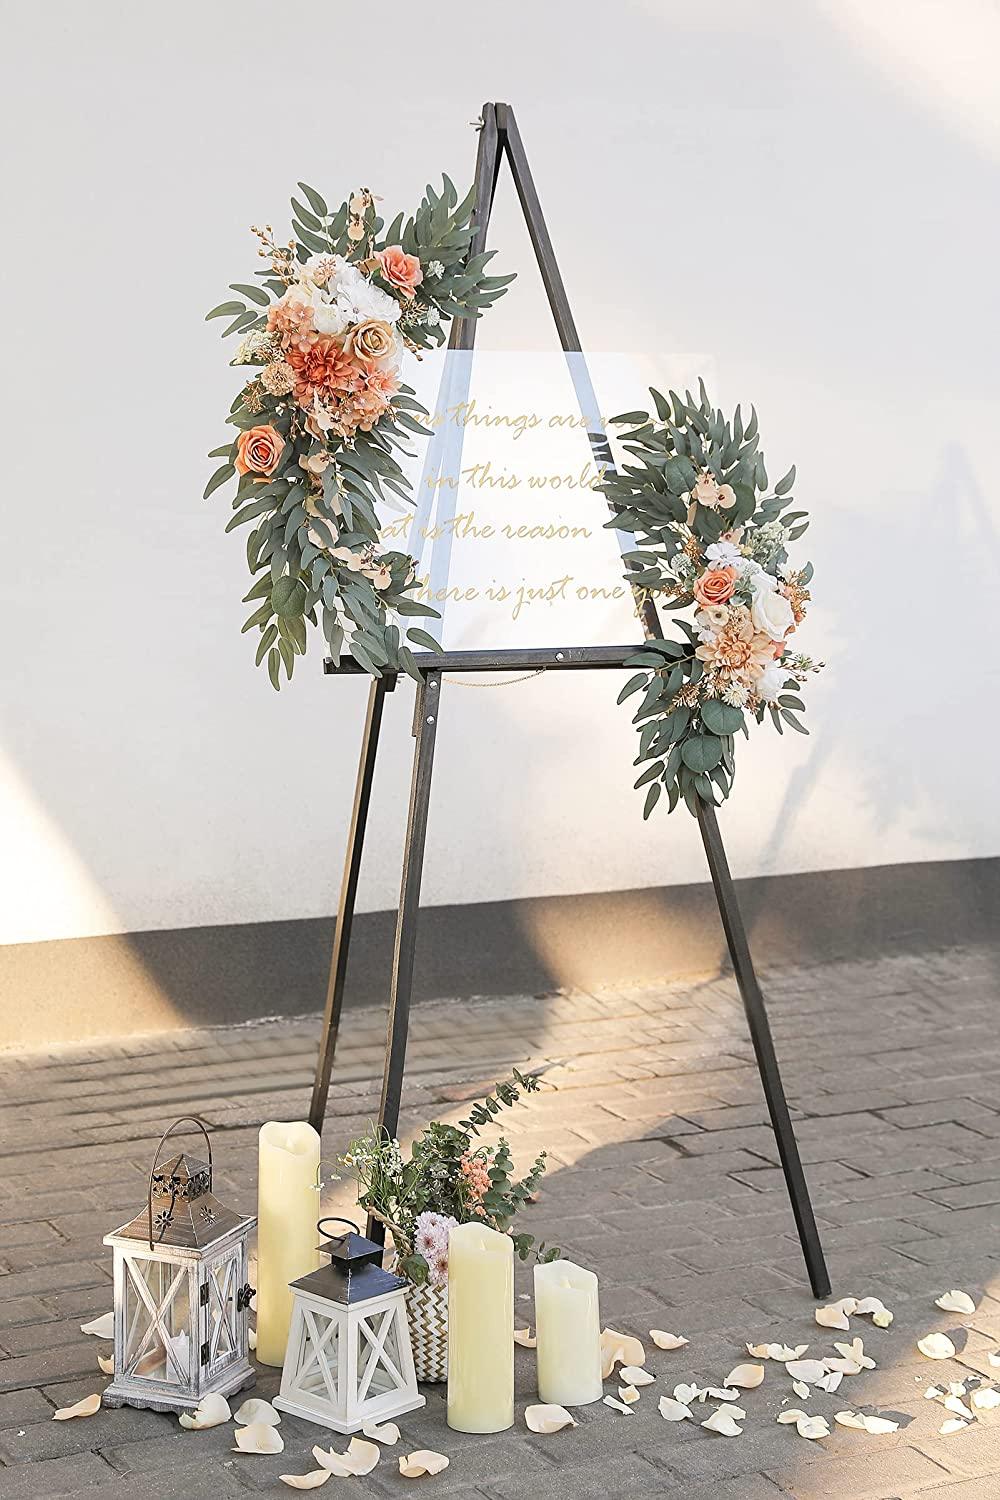 Artificial Wedding Arch Flowers Kit 2pcs Wedding Decor Flowers